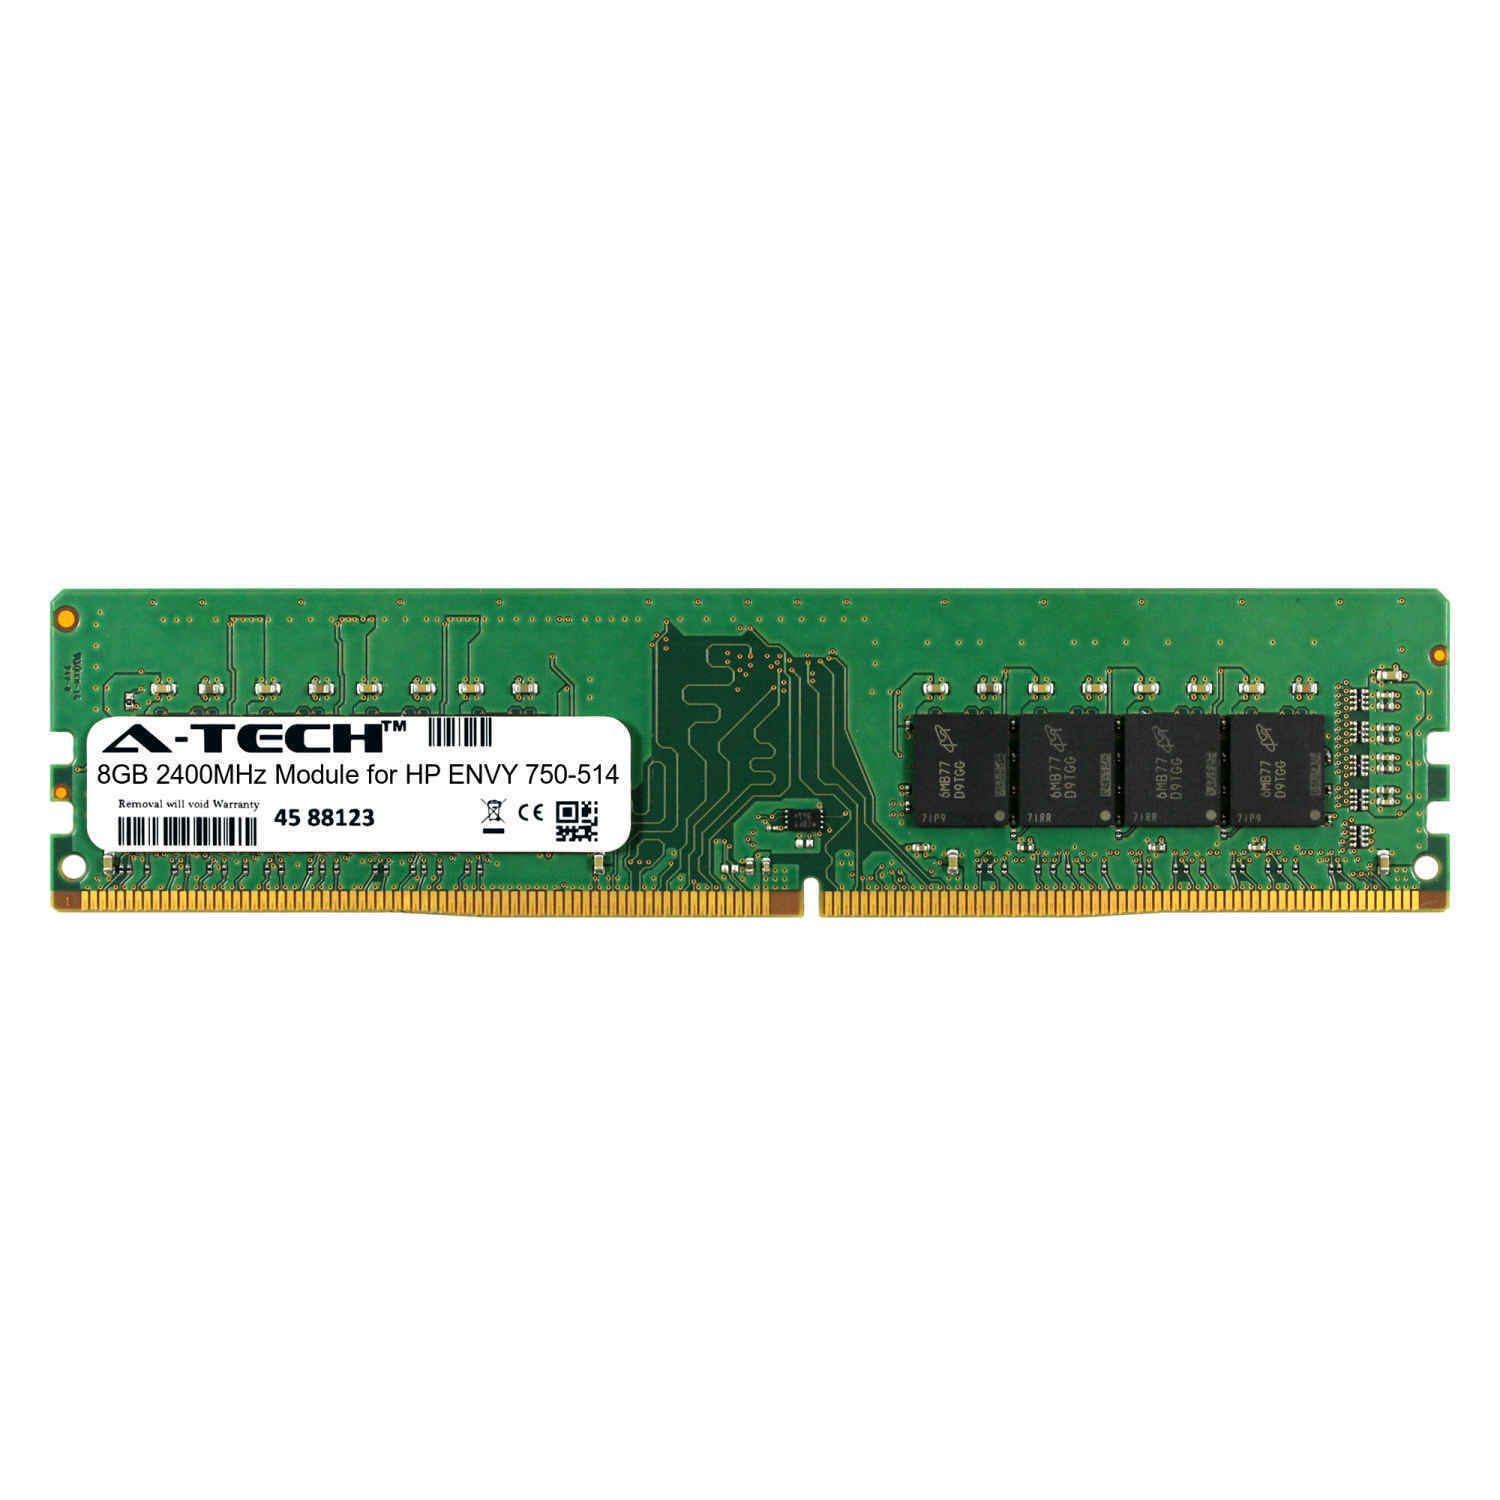 8GB DDR4-2400 HP ENVY 795-0010 Phoenix 860-014 795-0030qd 750-514 Memory RAM